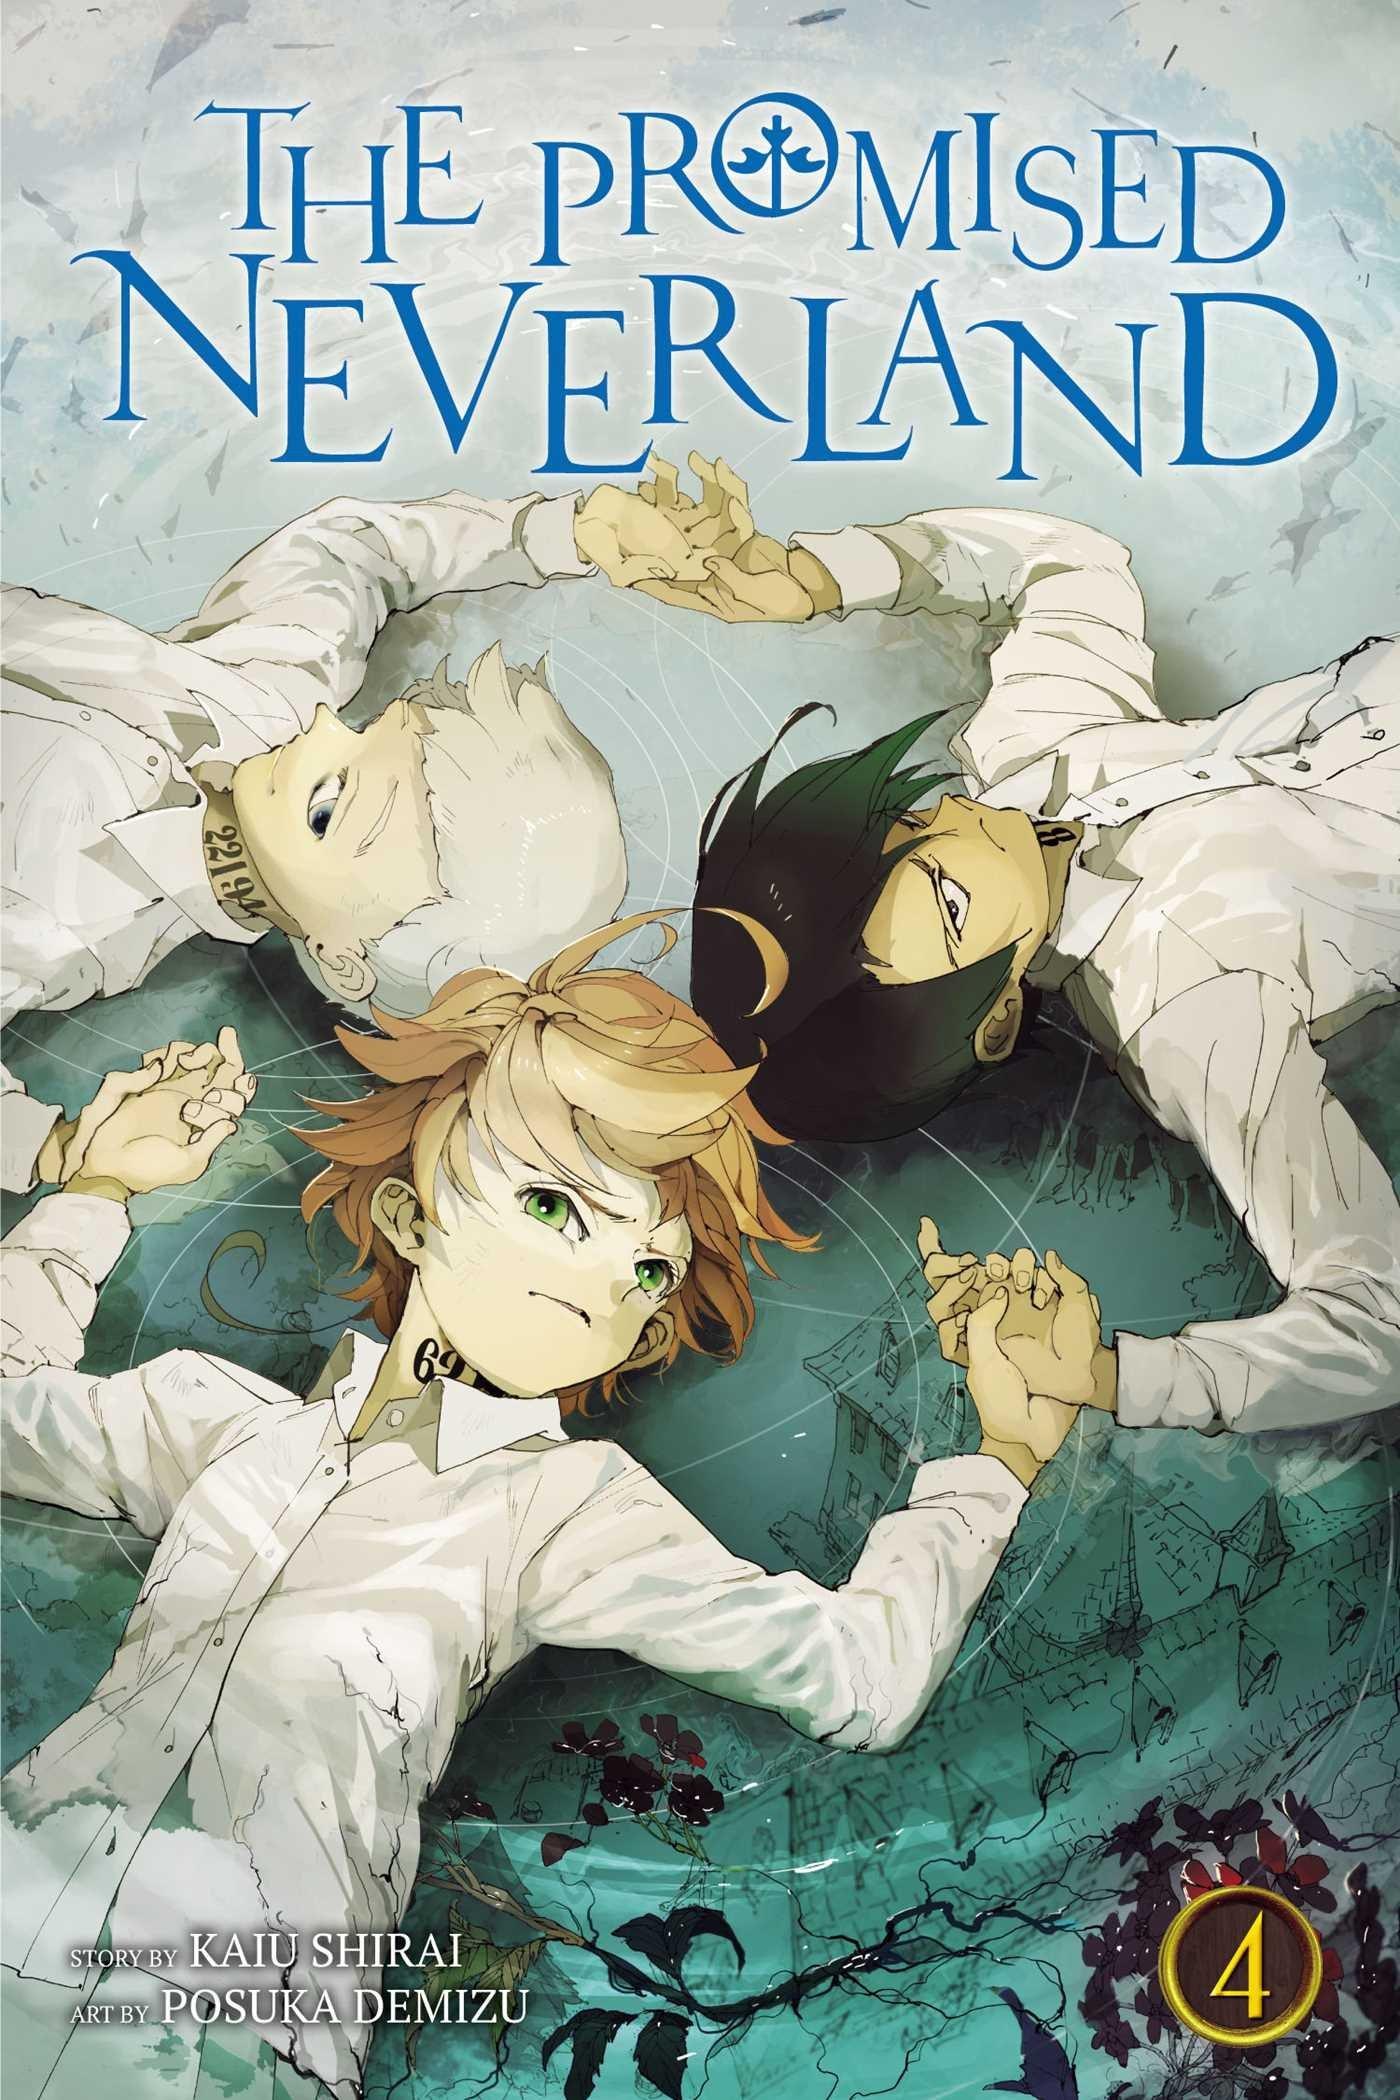 Emma The Promised Neverland Wallpaper english